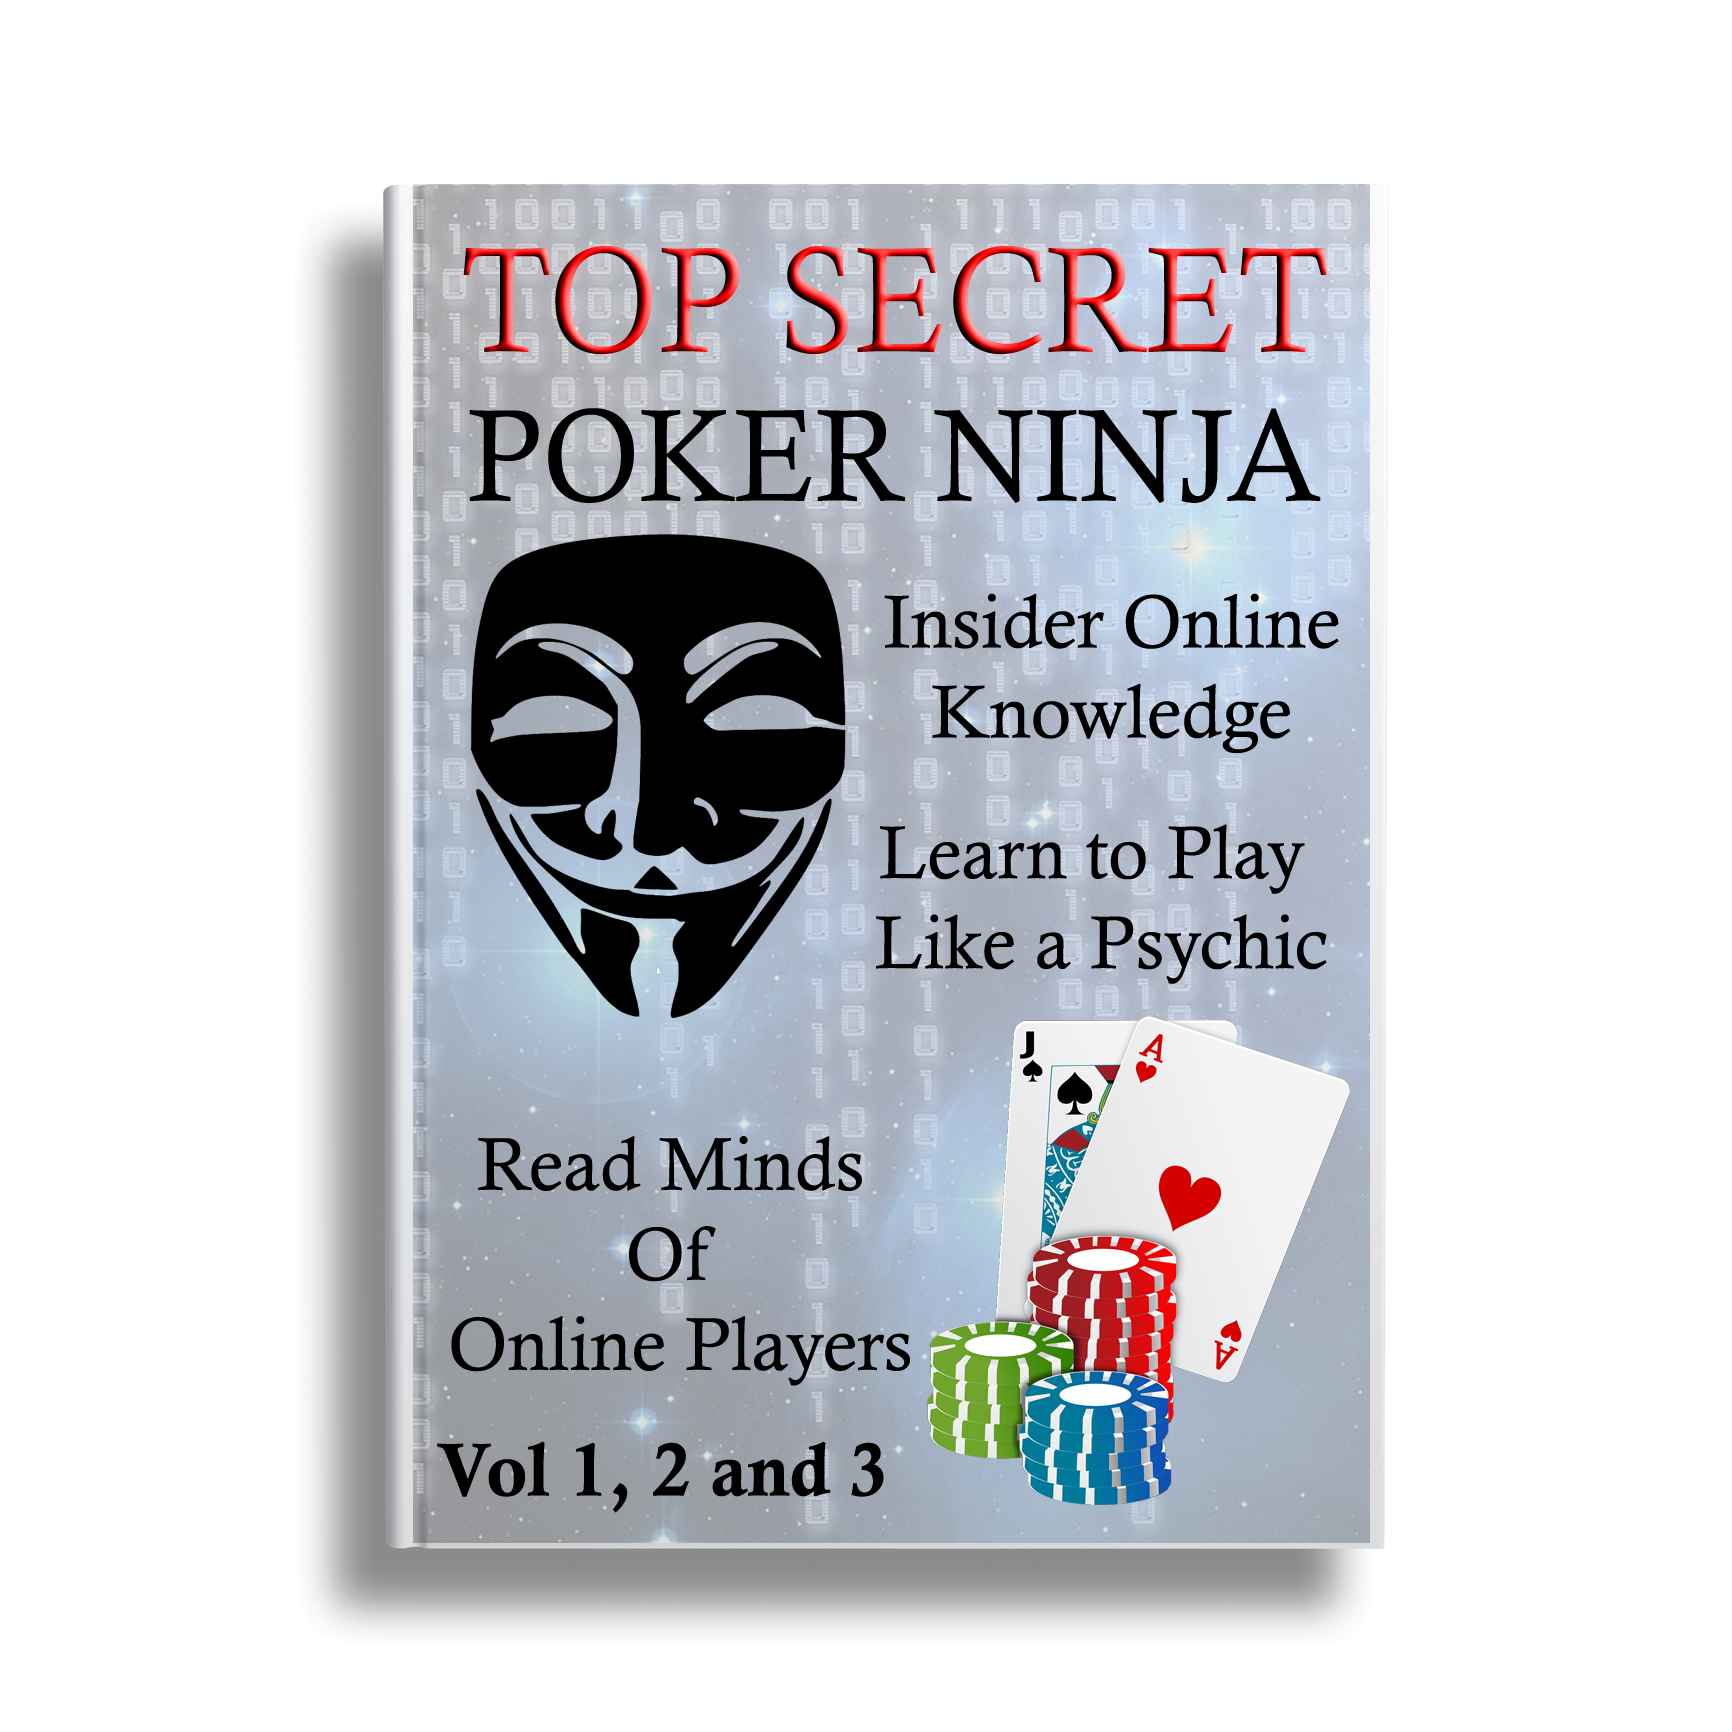 Top Secret Poker Ninja